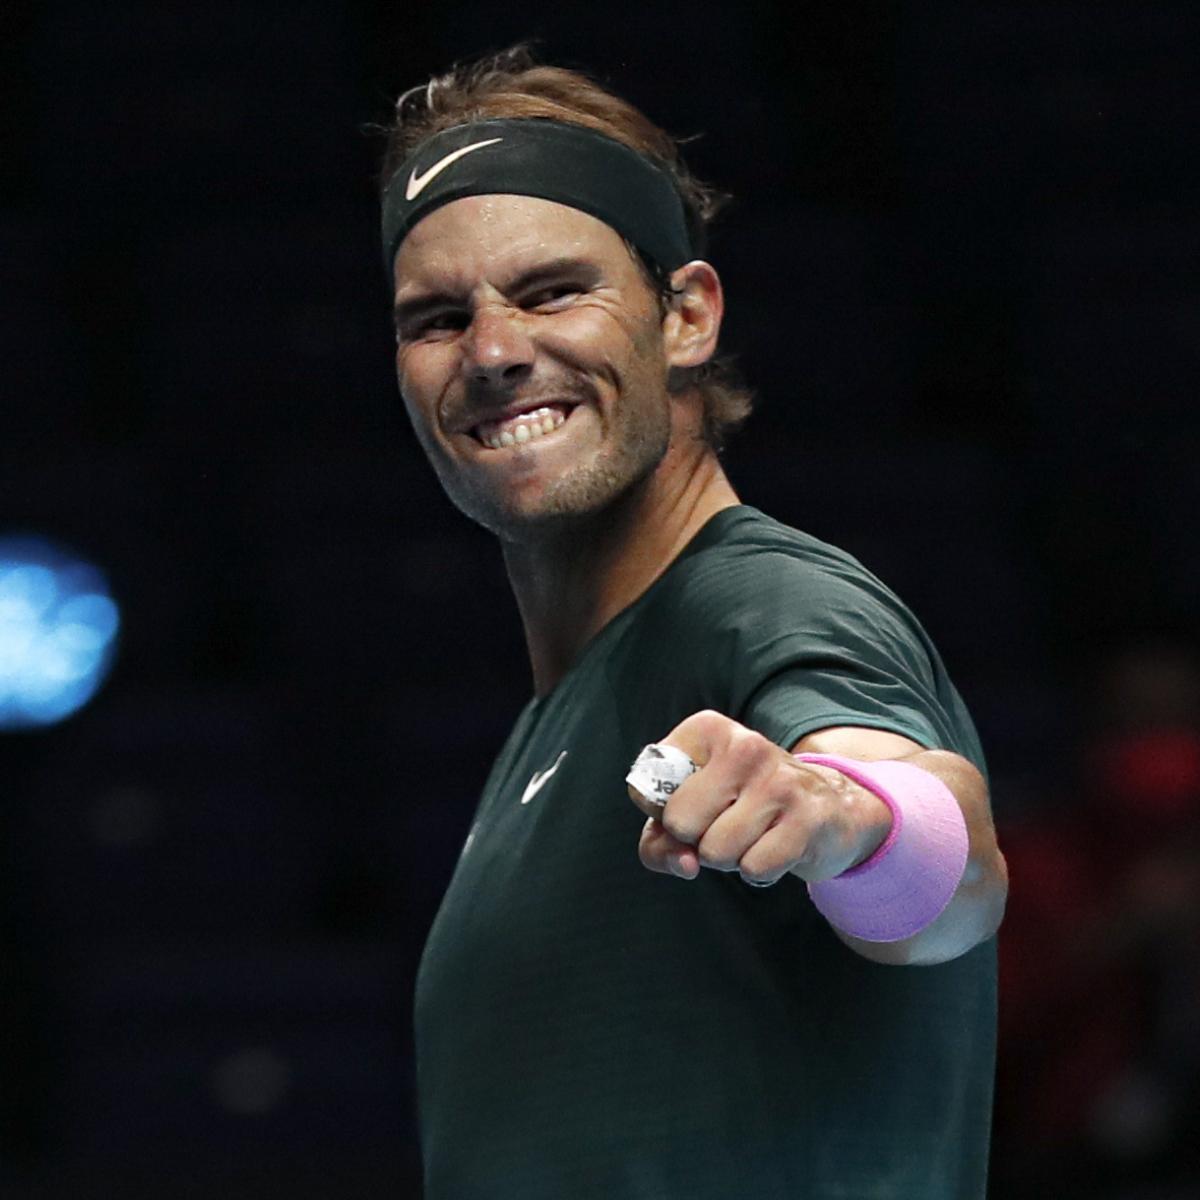 ATP World Tour Finals 2020 Outcomes: Rafael Nadal Advances to Semifinals